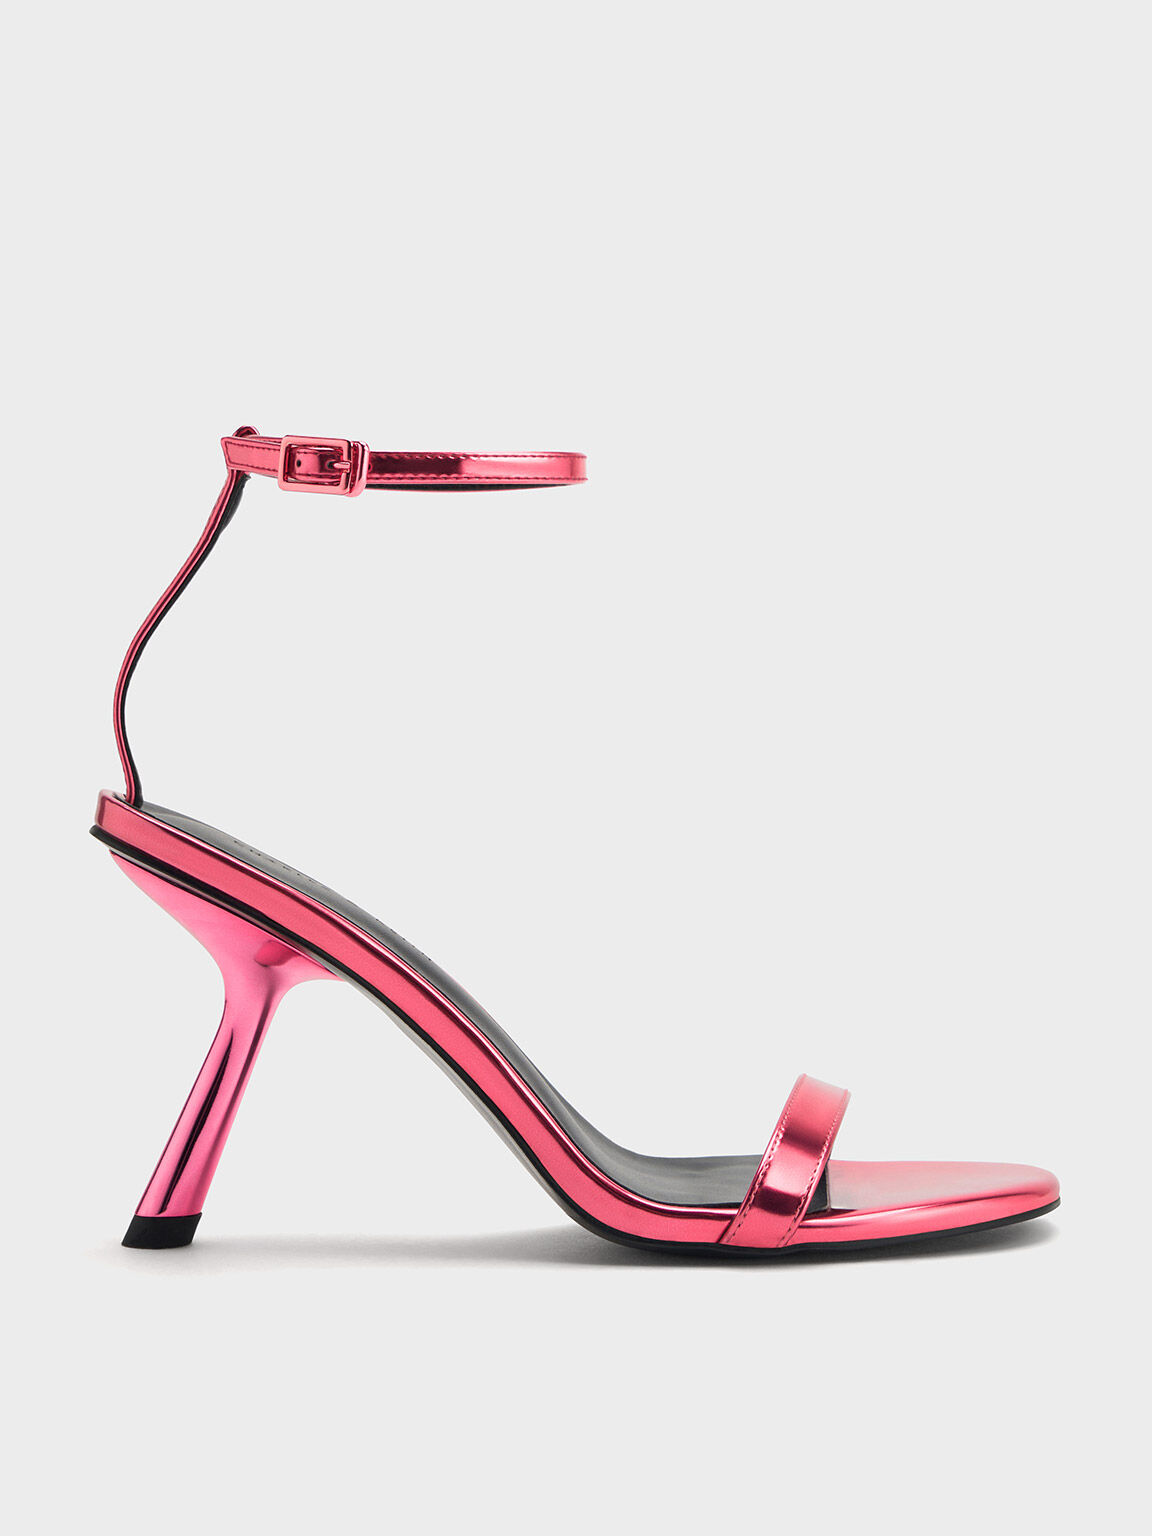 Pink Platform Sandals Heels | Metal Decoration Sandals | Platform Hot Pink  Heels - Women's Sandals - Aliexpress